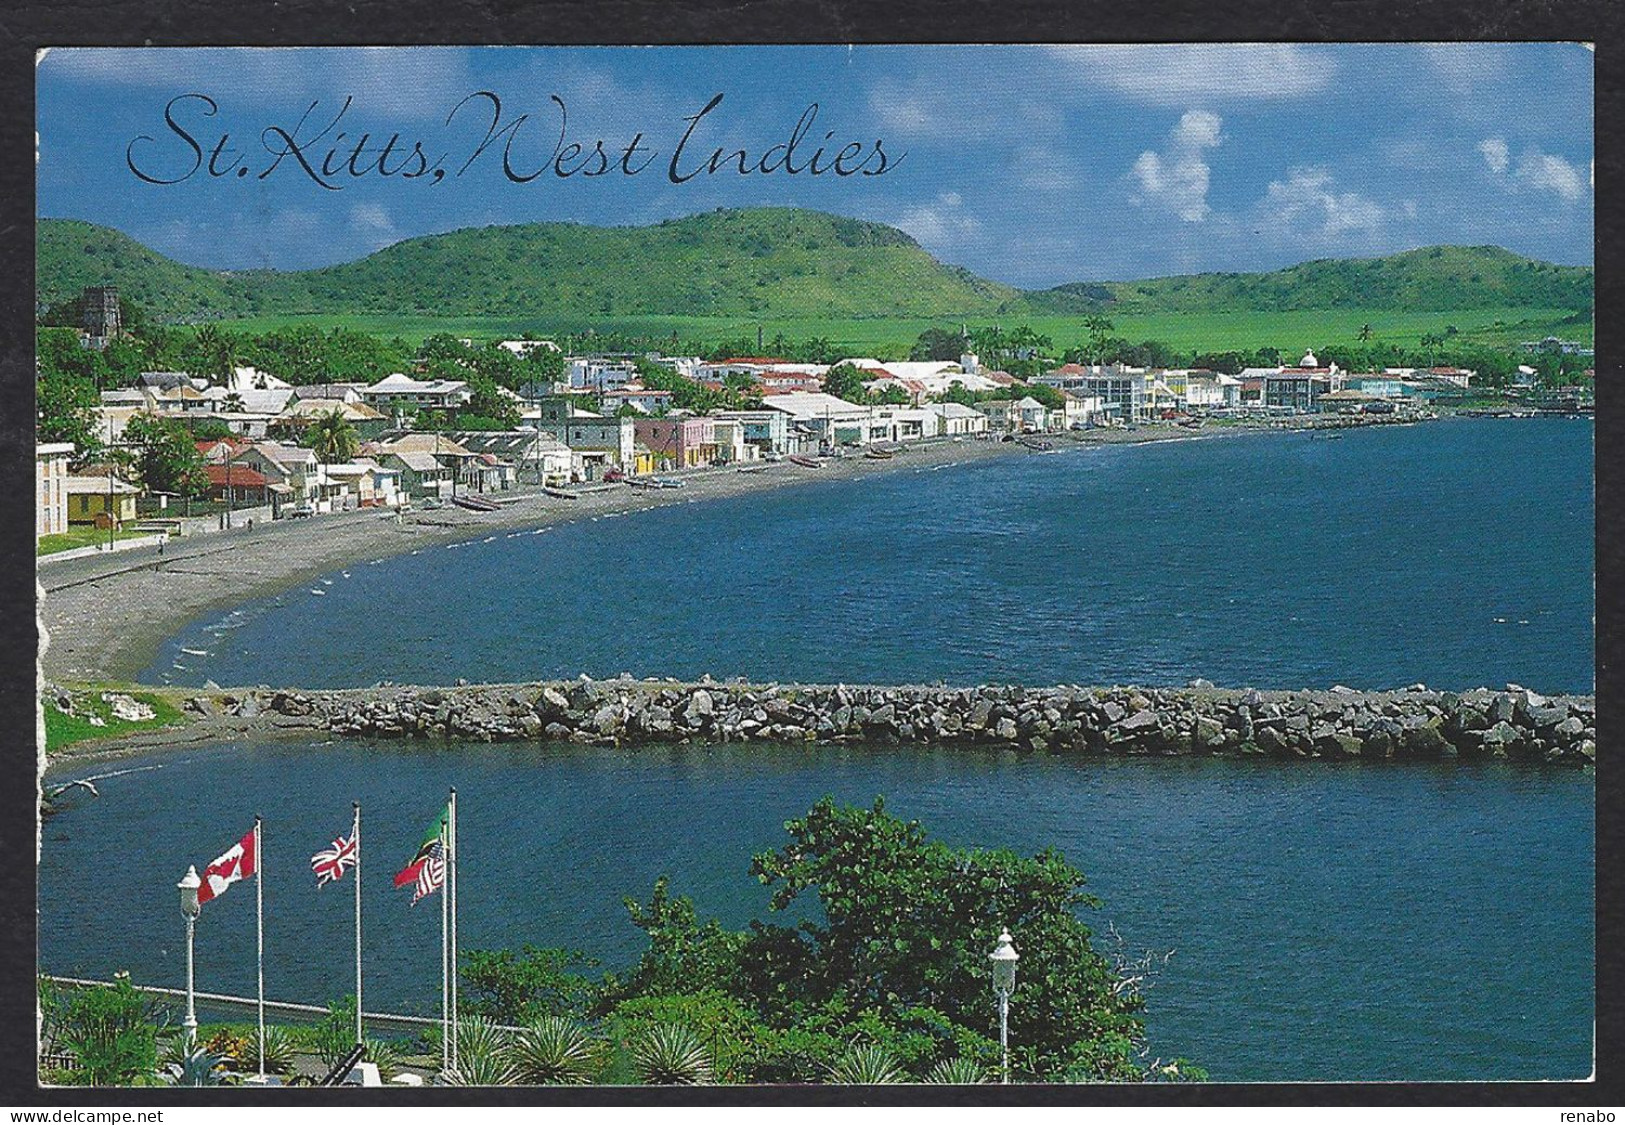 Antille - St. Kitts, West Indies 1993; Green Hills And Blue Ocean In Basseterre, Colline Verdi Oceano Blu; To Italy. - St. Kitts Und Nevis